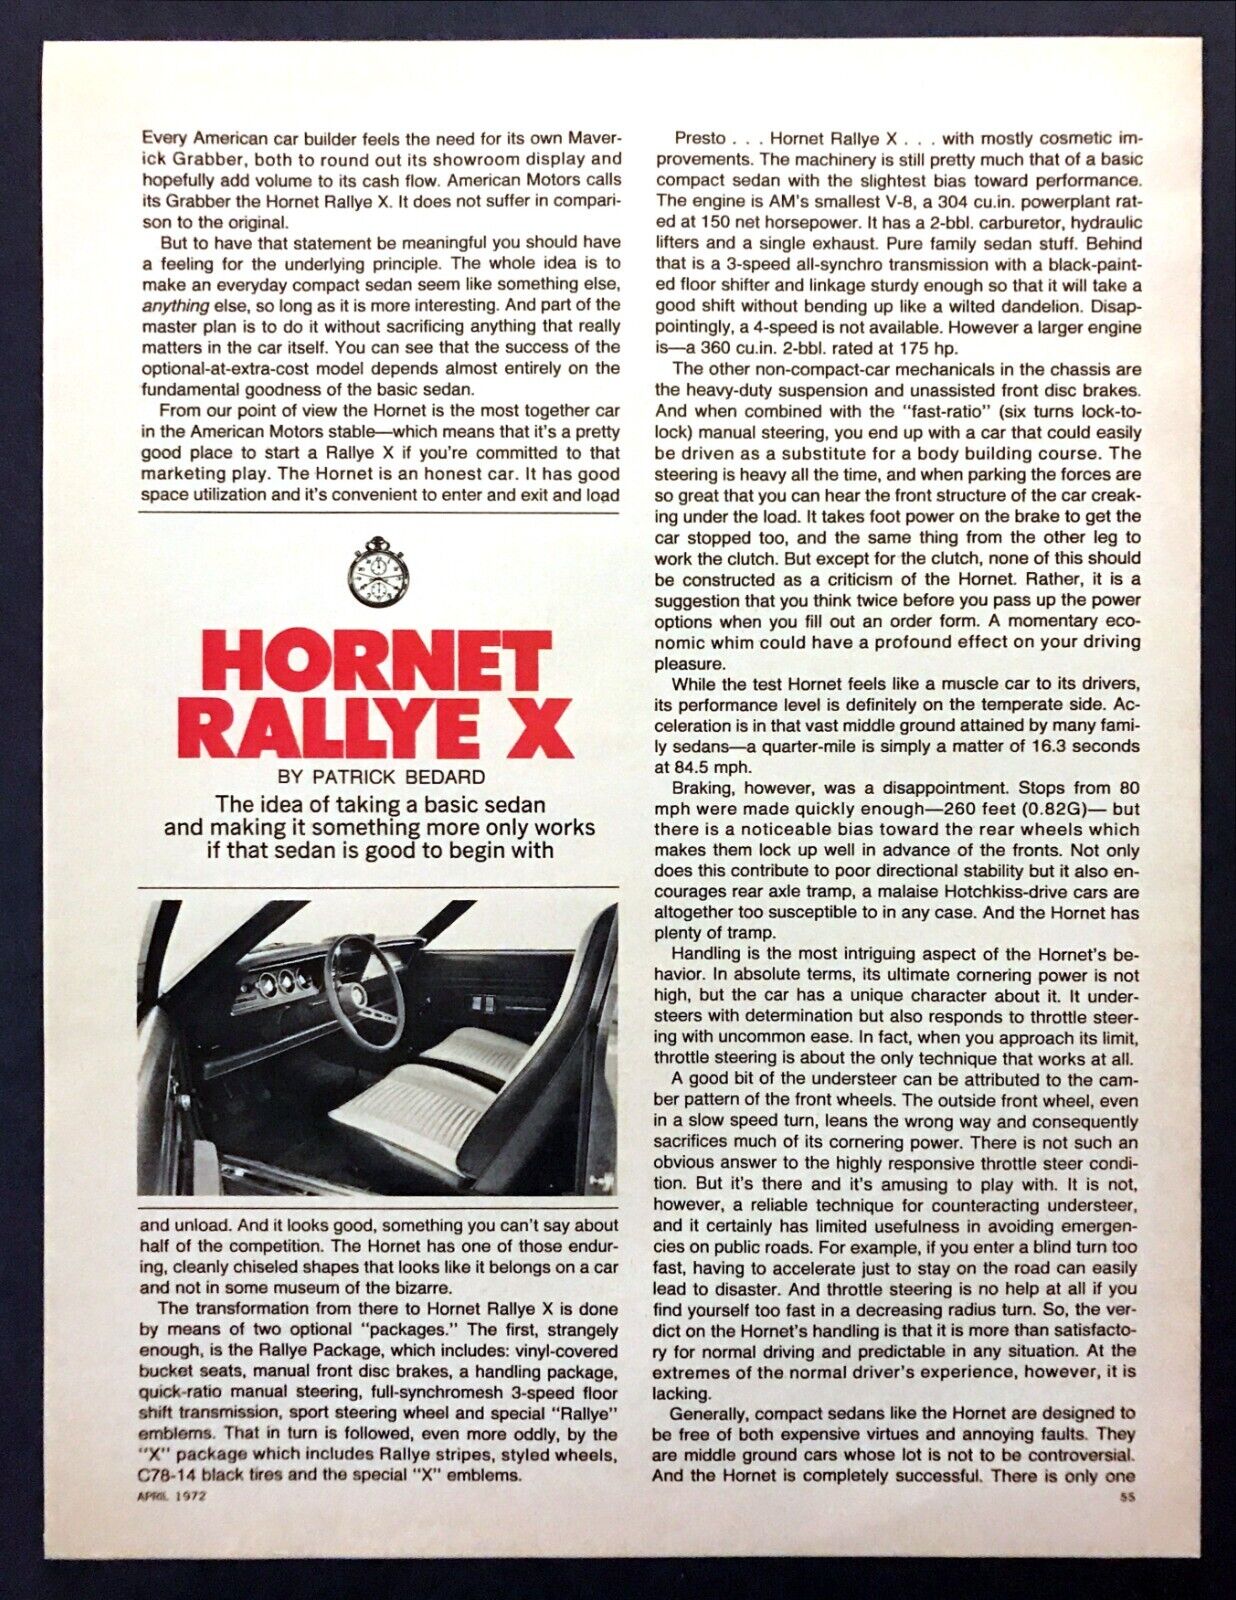 1972 AMC Hornet Rallye X Coupe Road Test Tech Data Photos Review Article